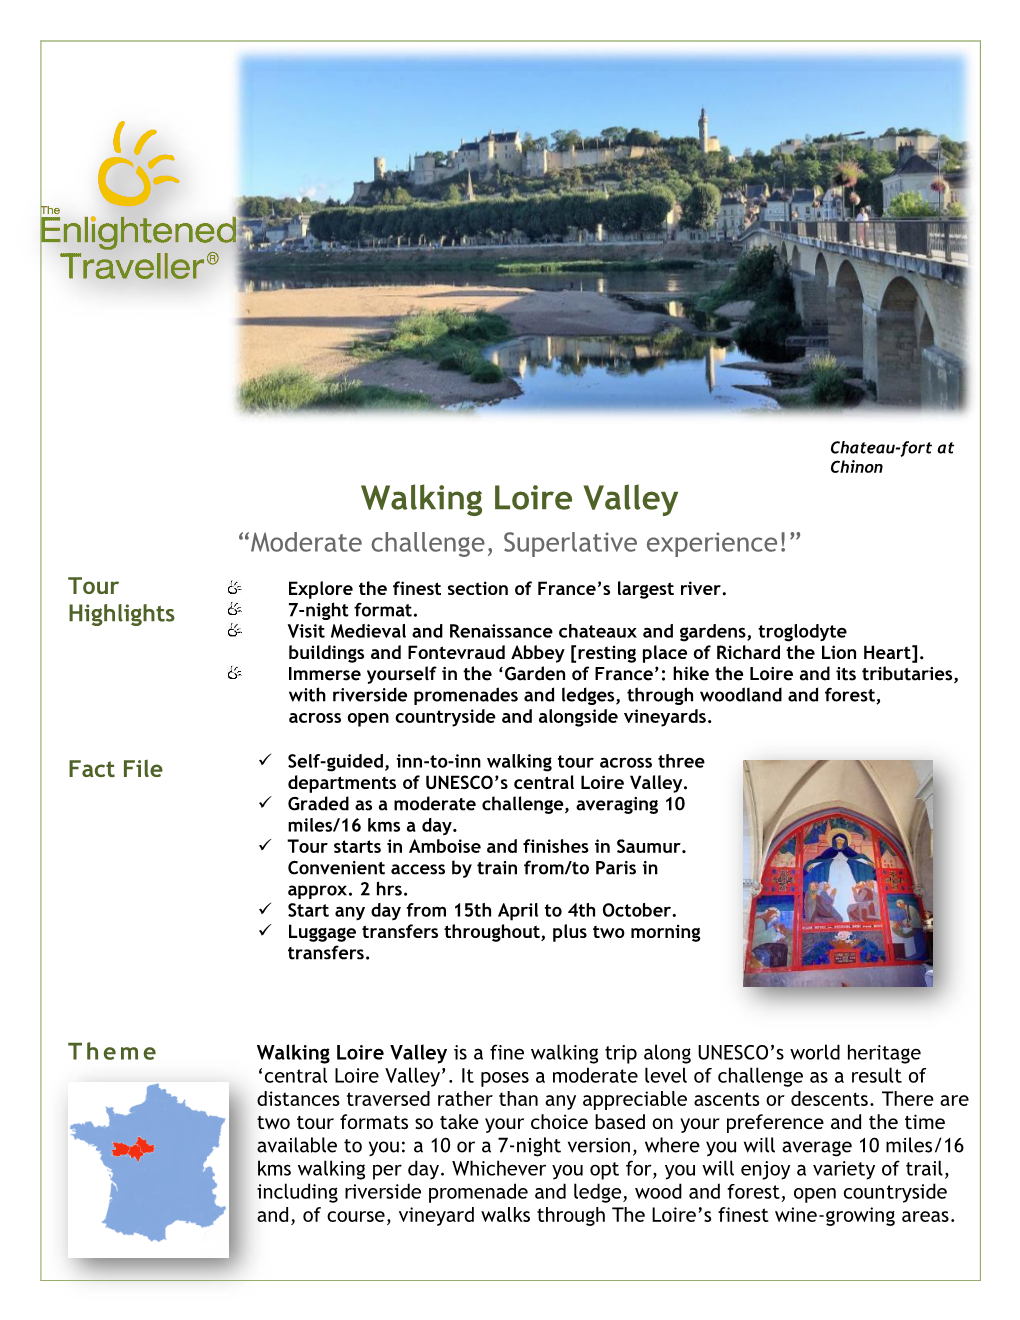 Walking Loire Valley “Moderate Challenge, Superlative Experience!”